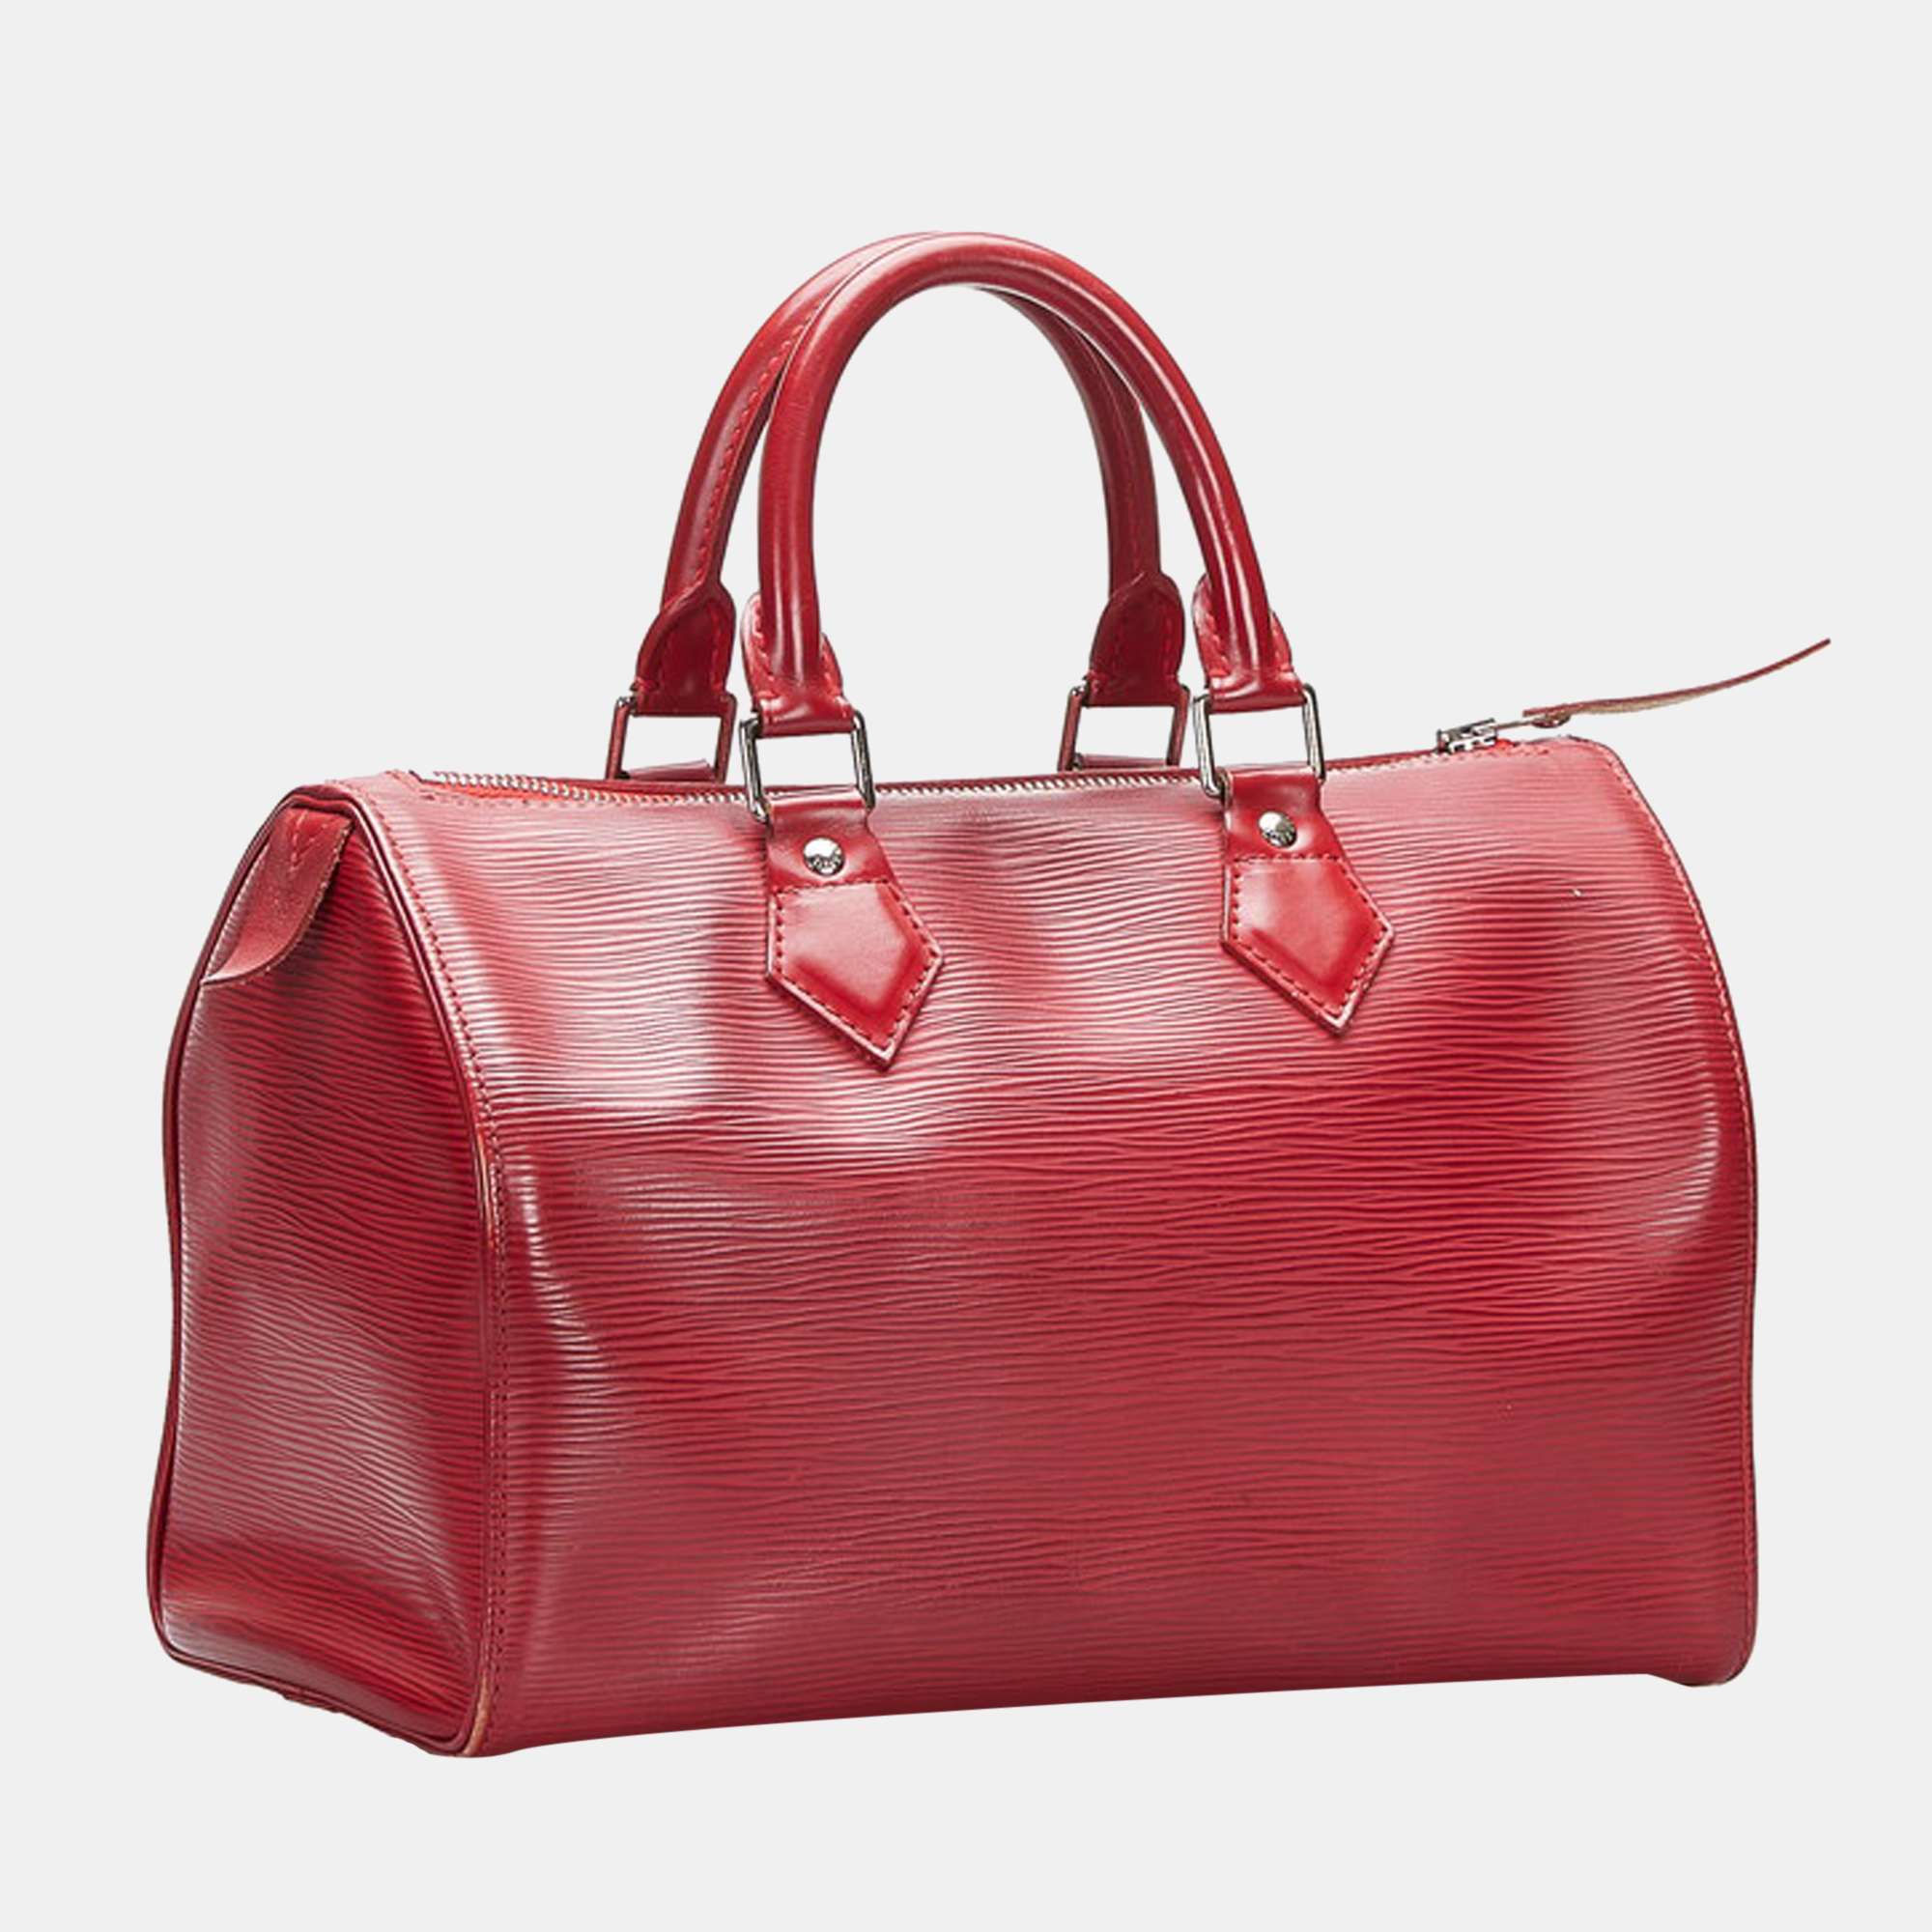 

Louis Vuitton Red Epi Leather Speedy 25 Handbag